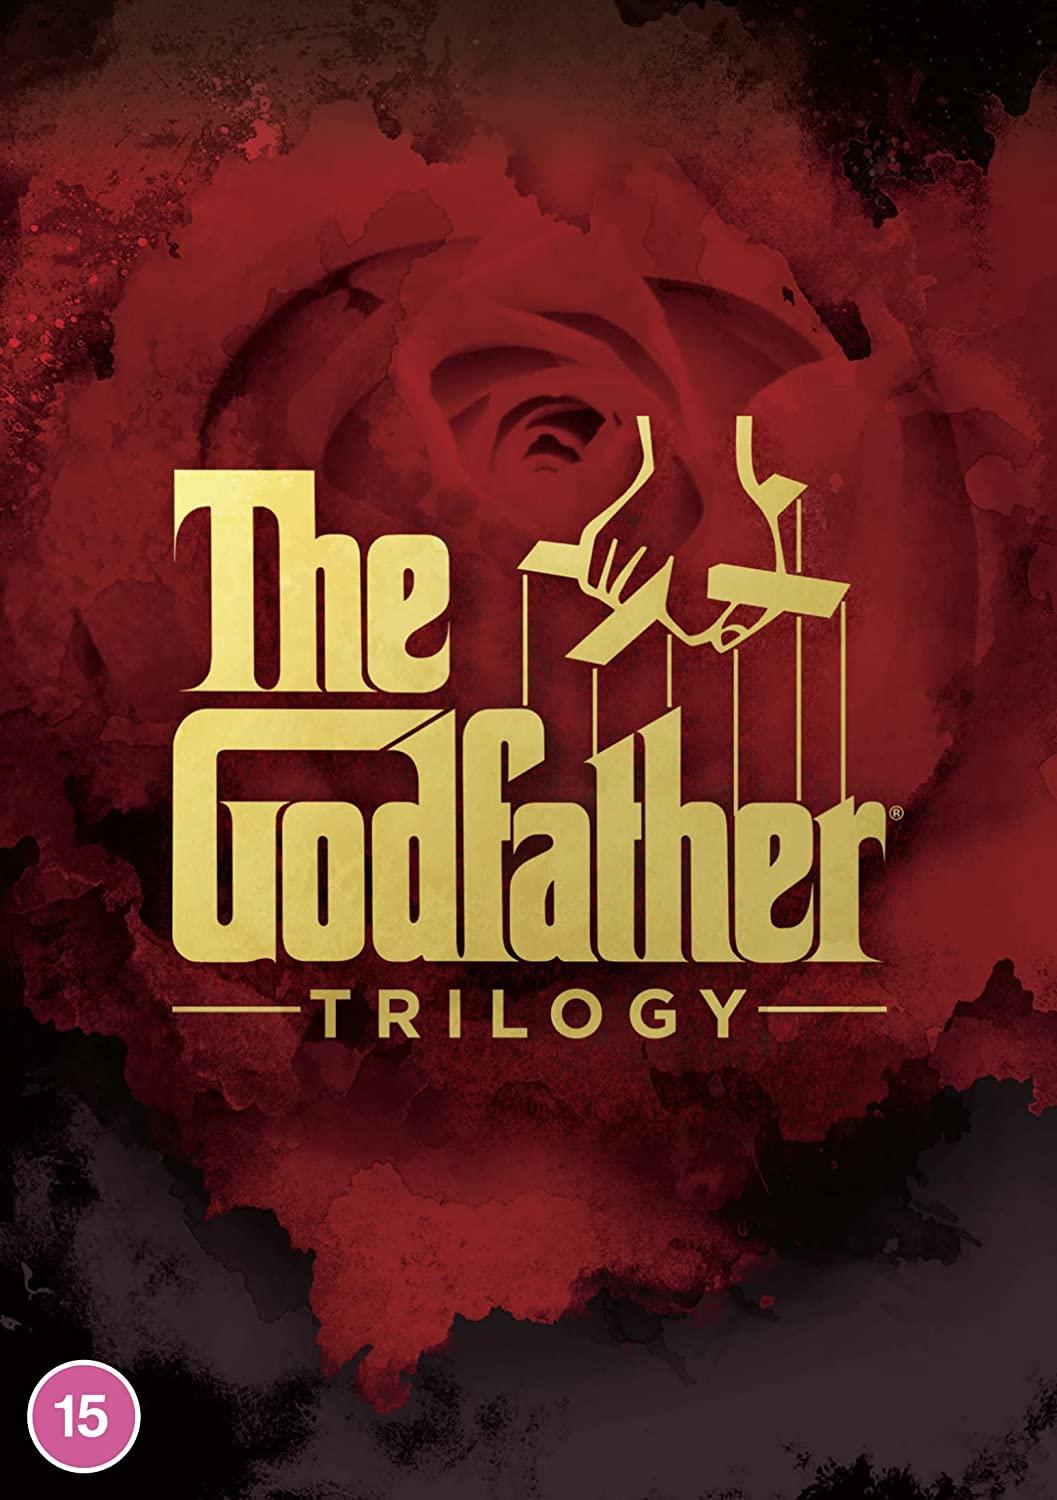 Godfather Trilogy DVD Box